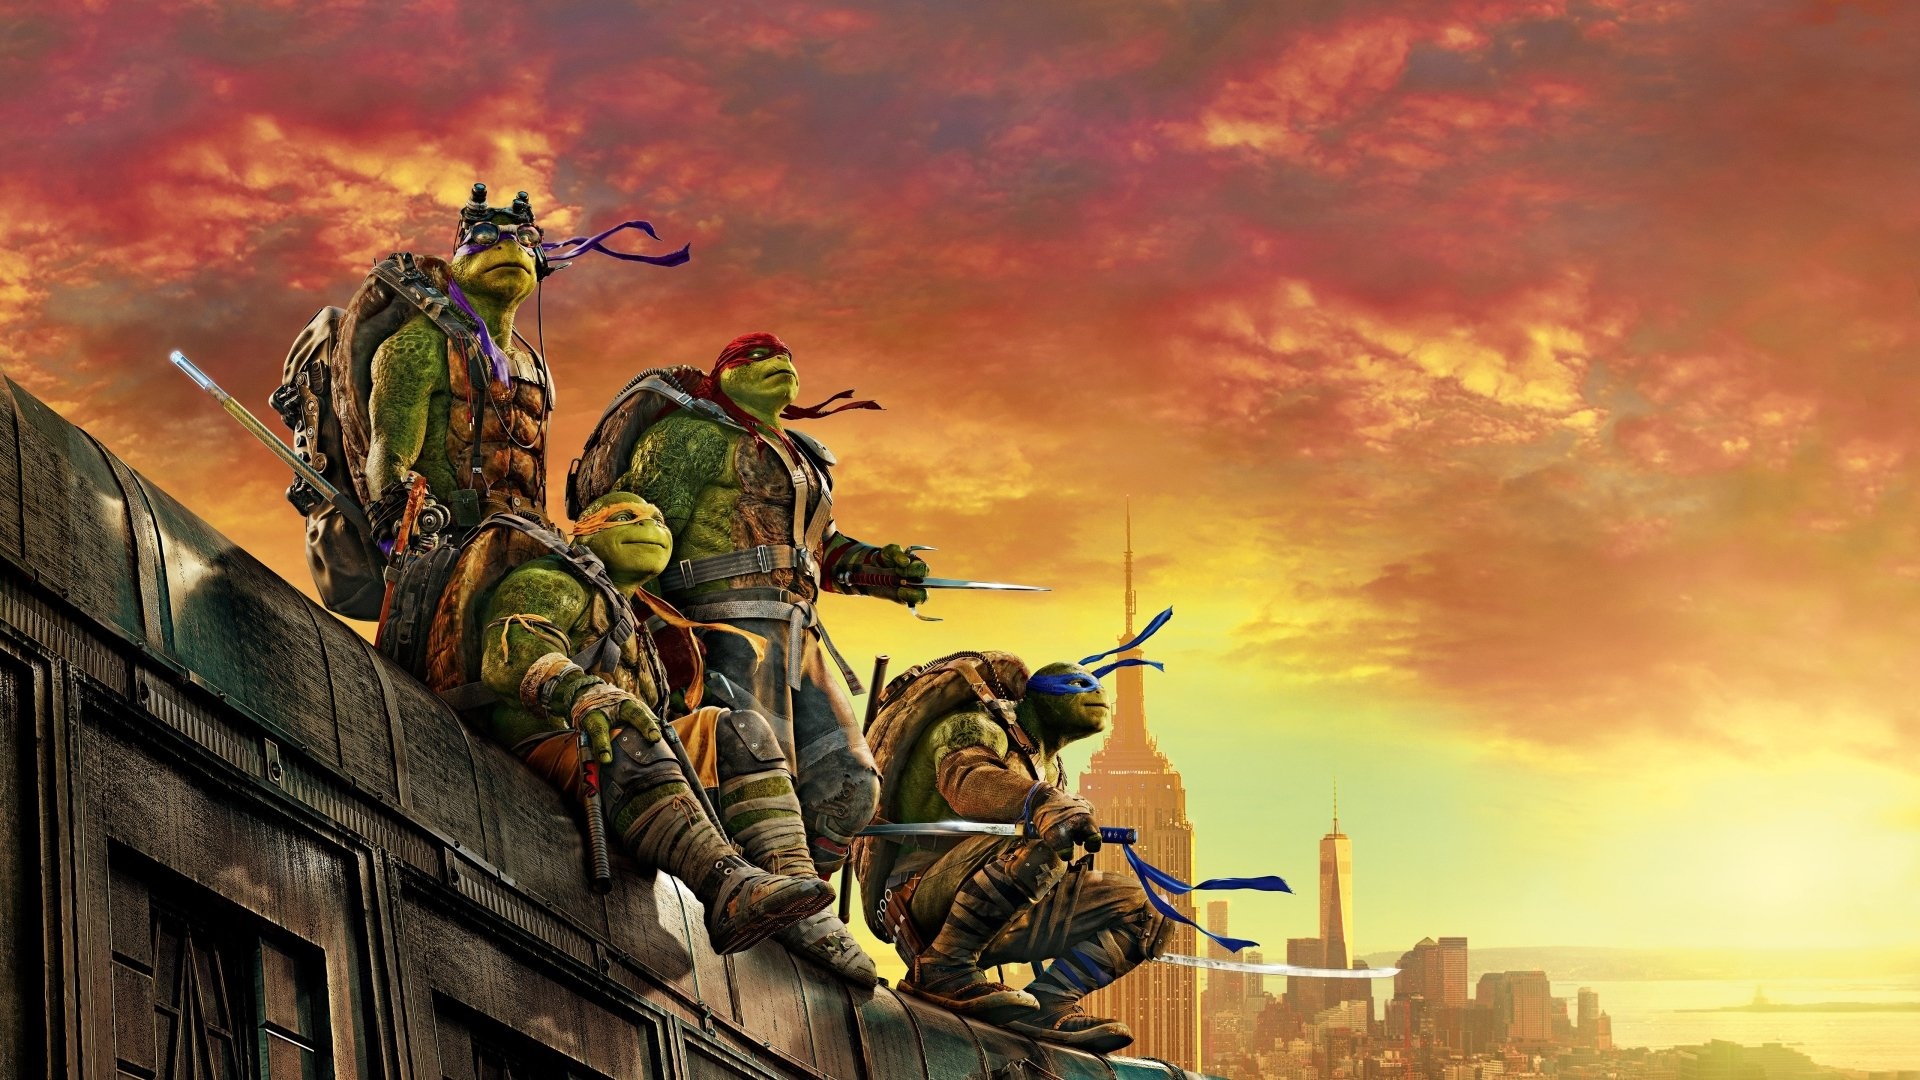 Mutant Ninja Turtles, 4K Ultra HD, Wallpaper background images, Animated heroes, 1920x1080 Full HD Desktop